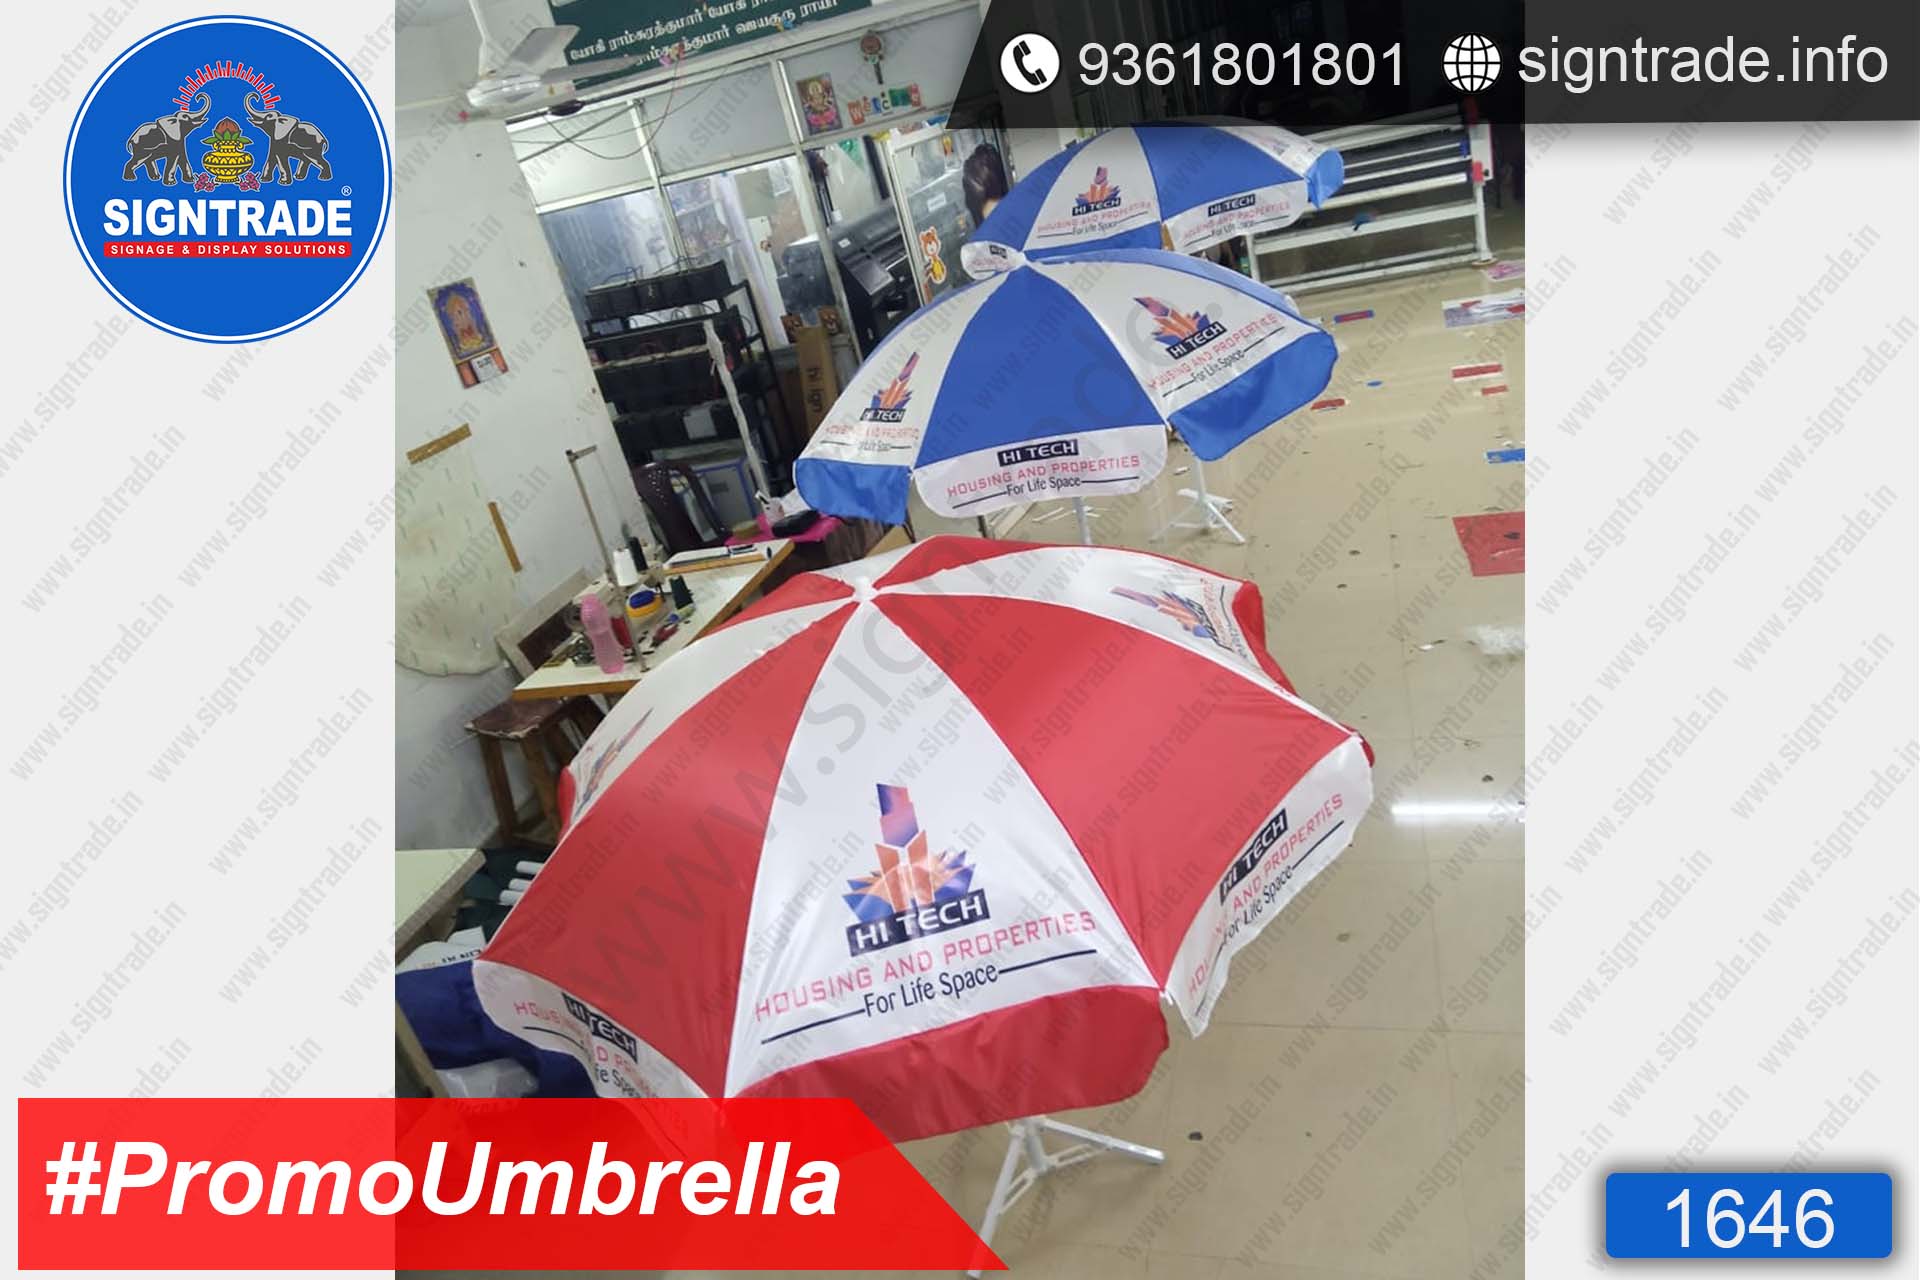 HITECH HOUSING & PROPERTIES, Chennai - SIGNTRADE - Promotional Umbrella Manufactures in Chennai